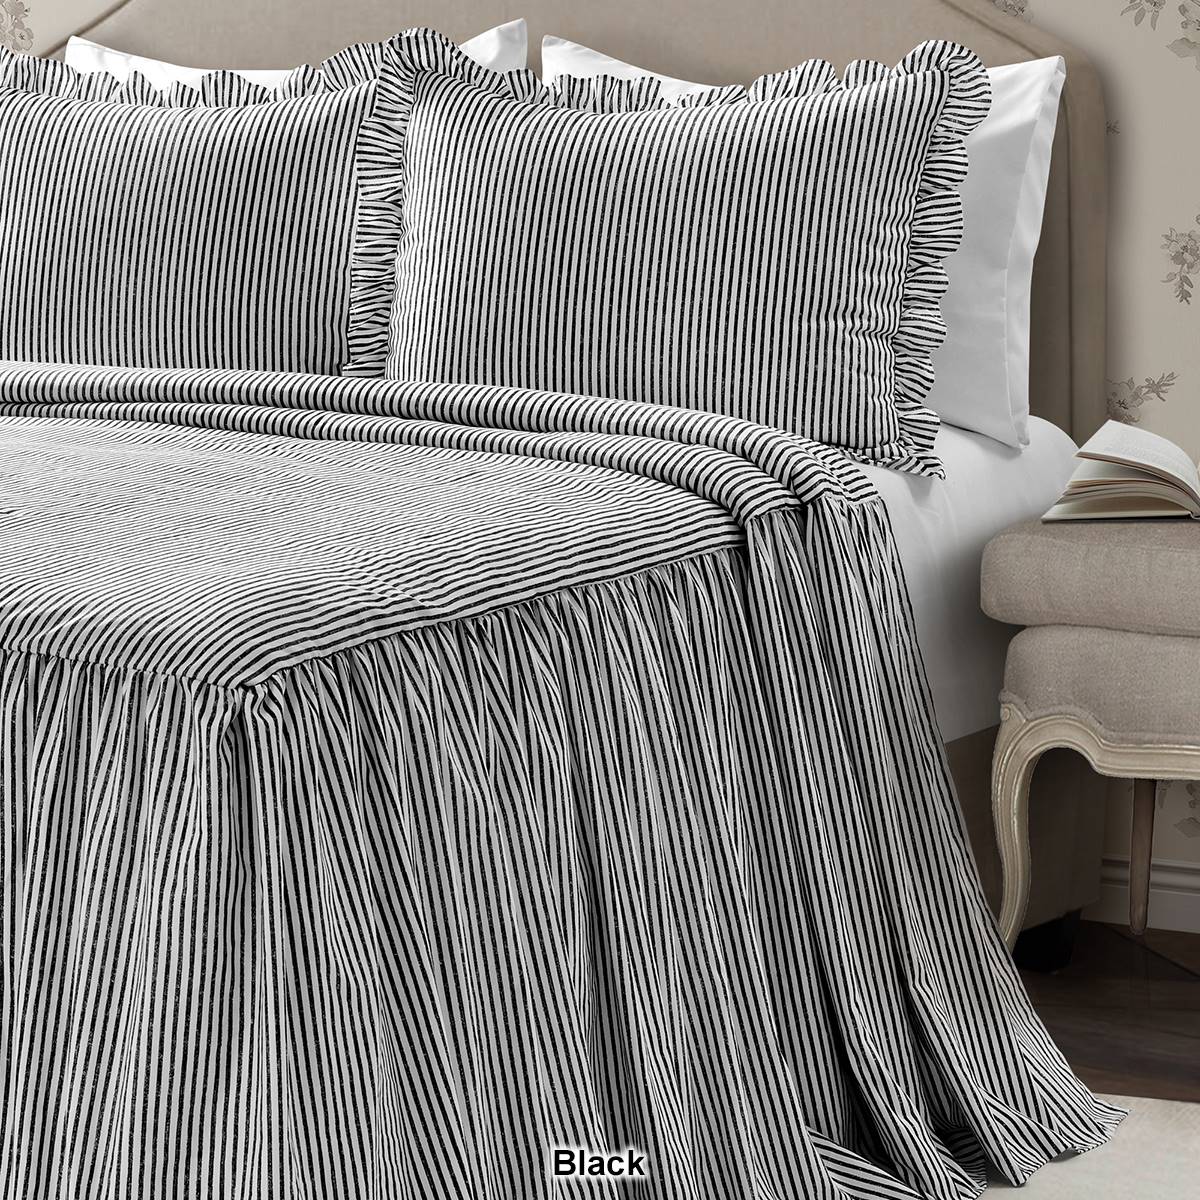 Lush Decor(R) Ticking Stripe Bedspread Set